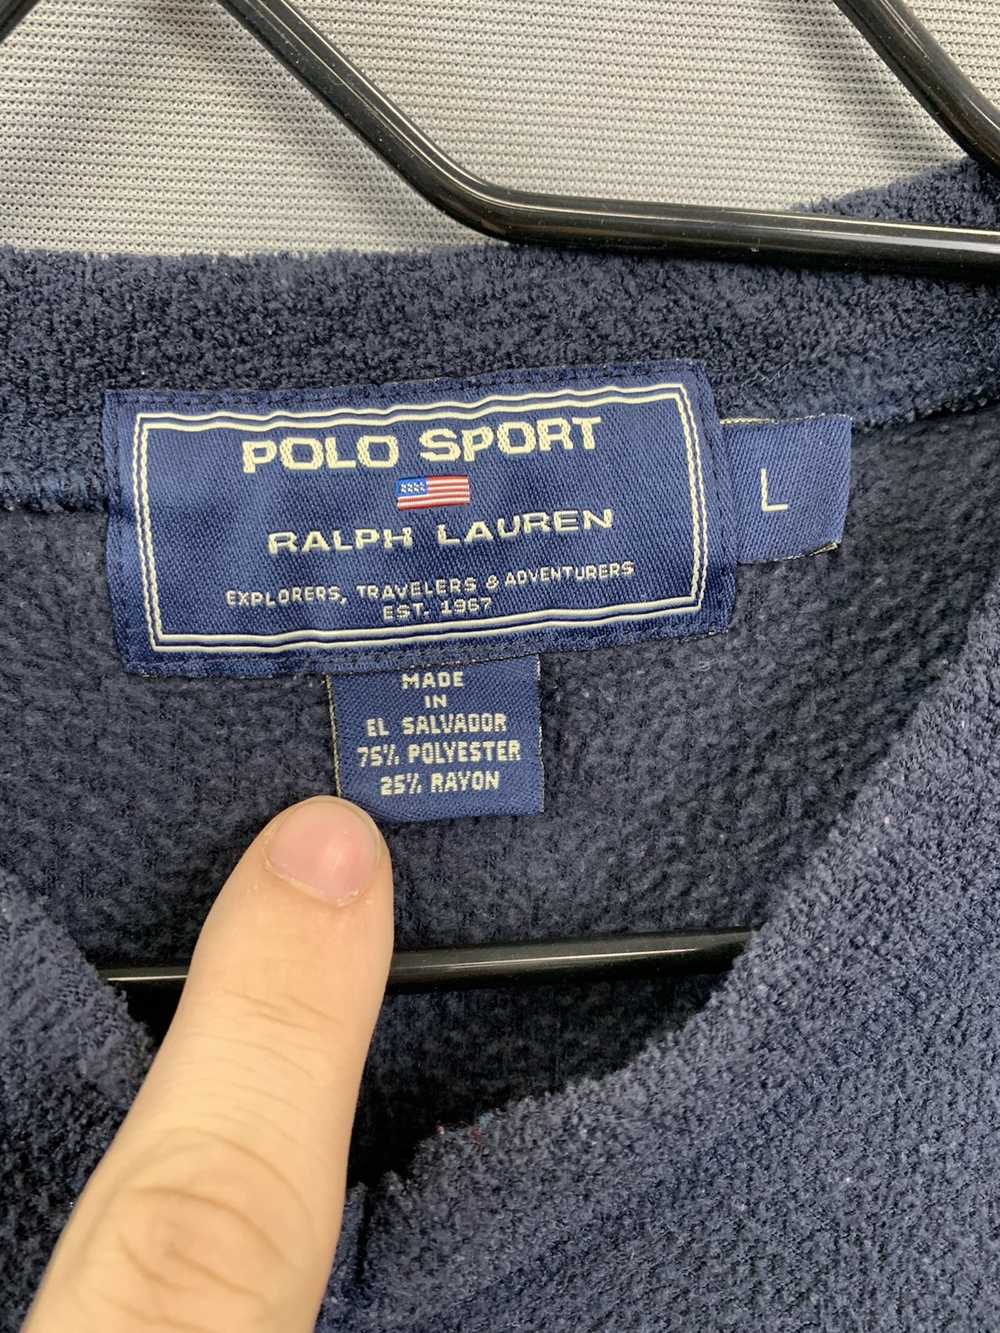 Polo Ralph Lauren Polo Sport Sweatshirt - image 4